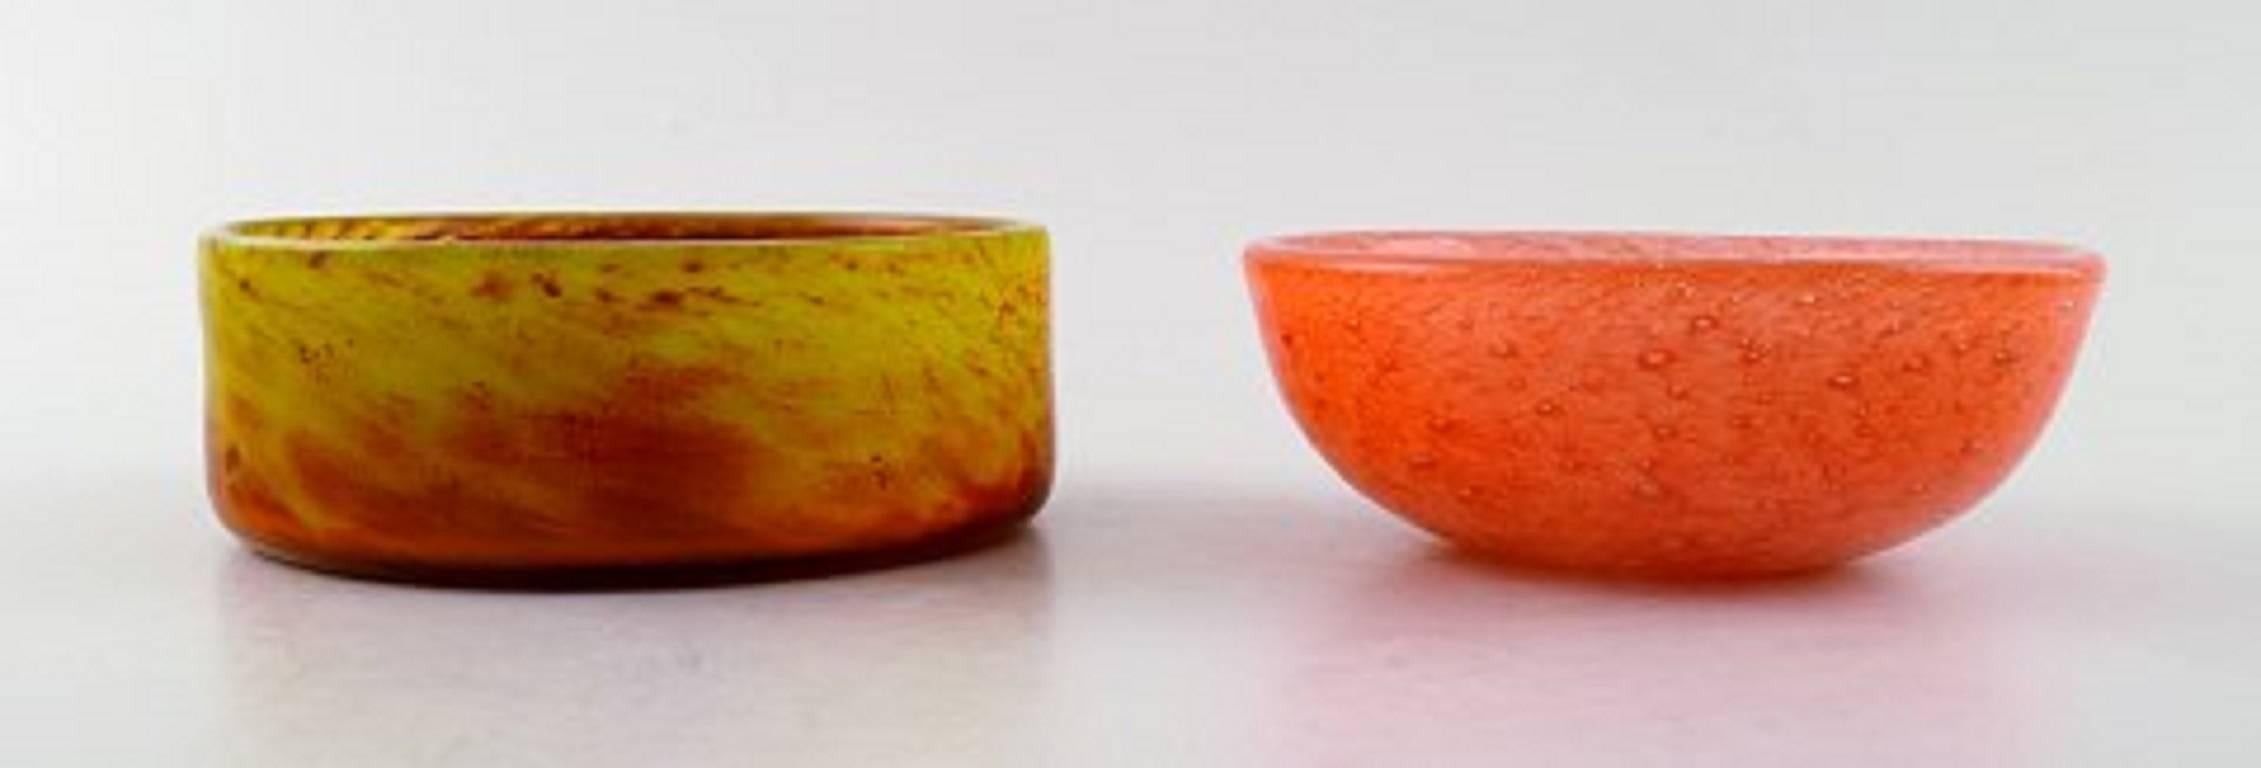 orange bowls and vases